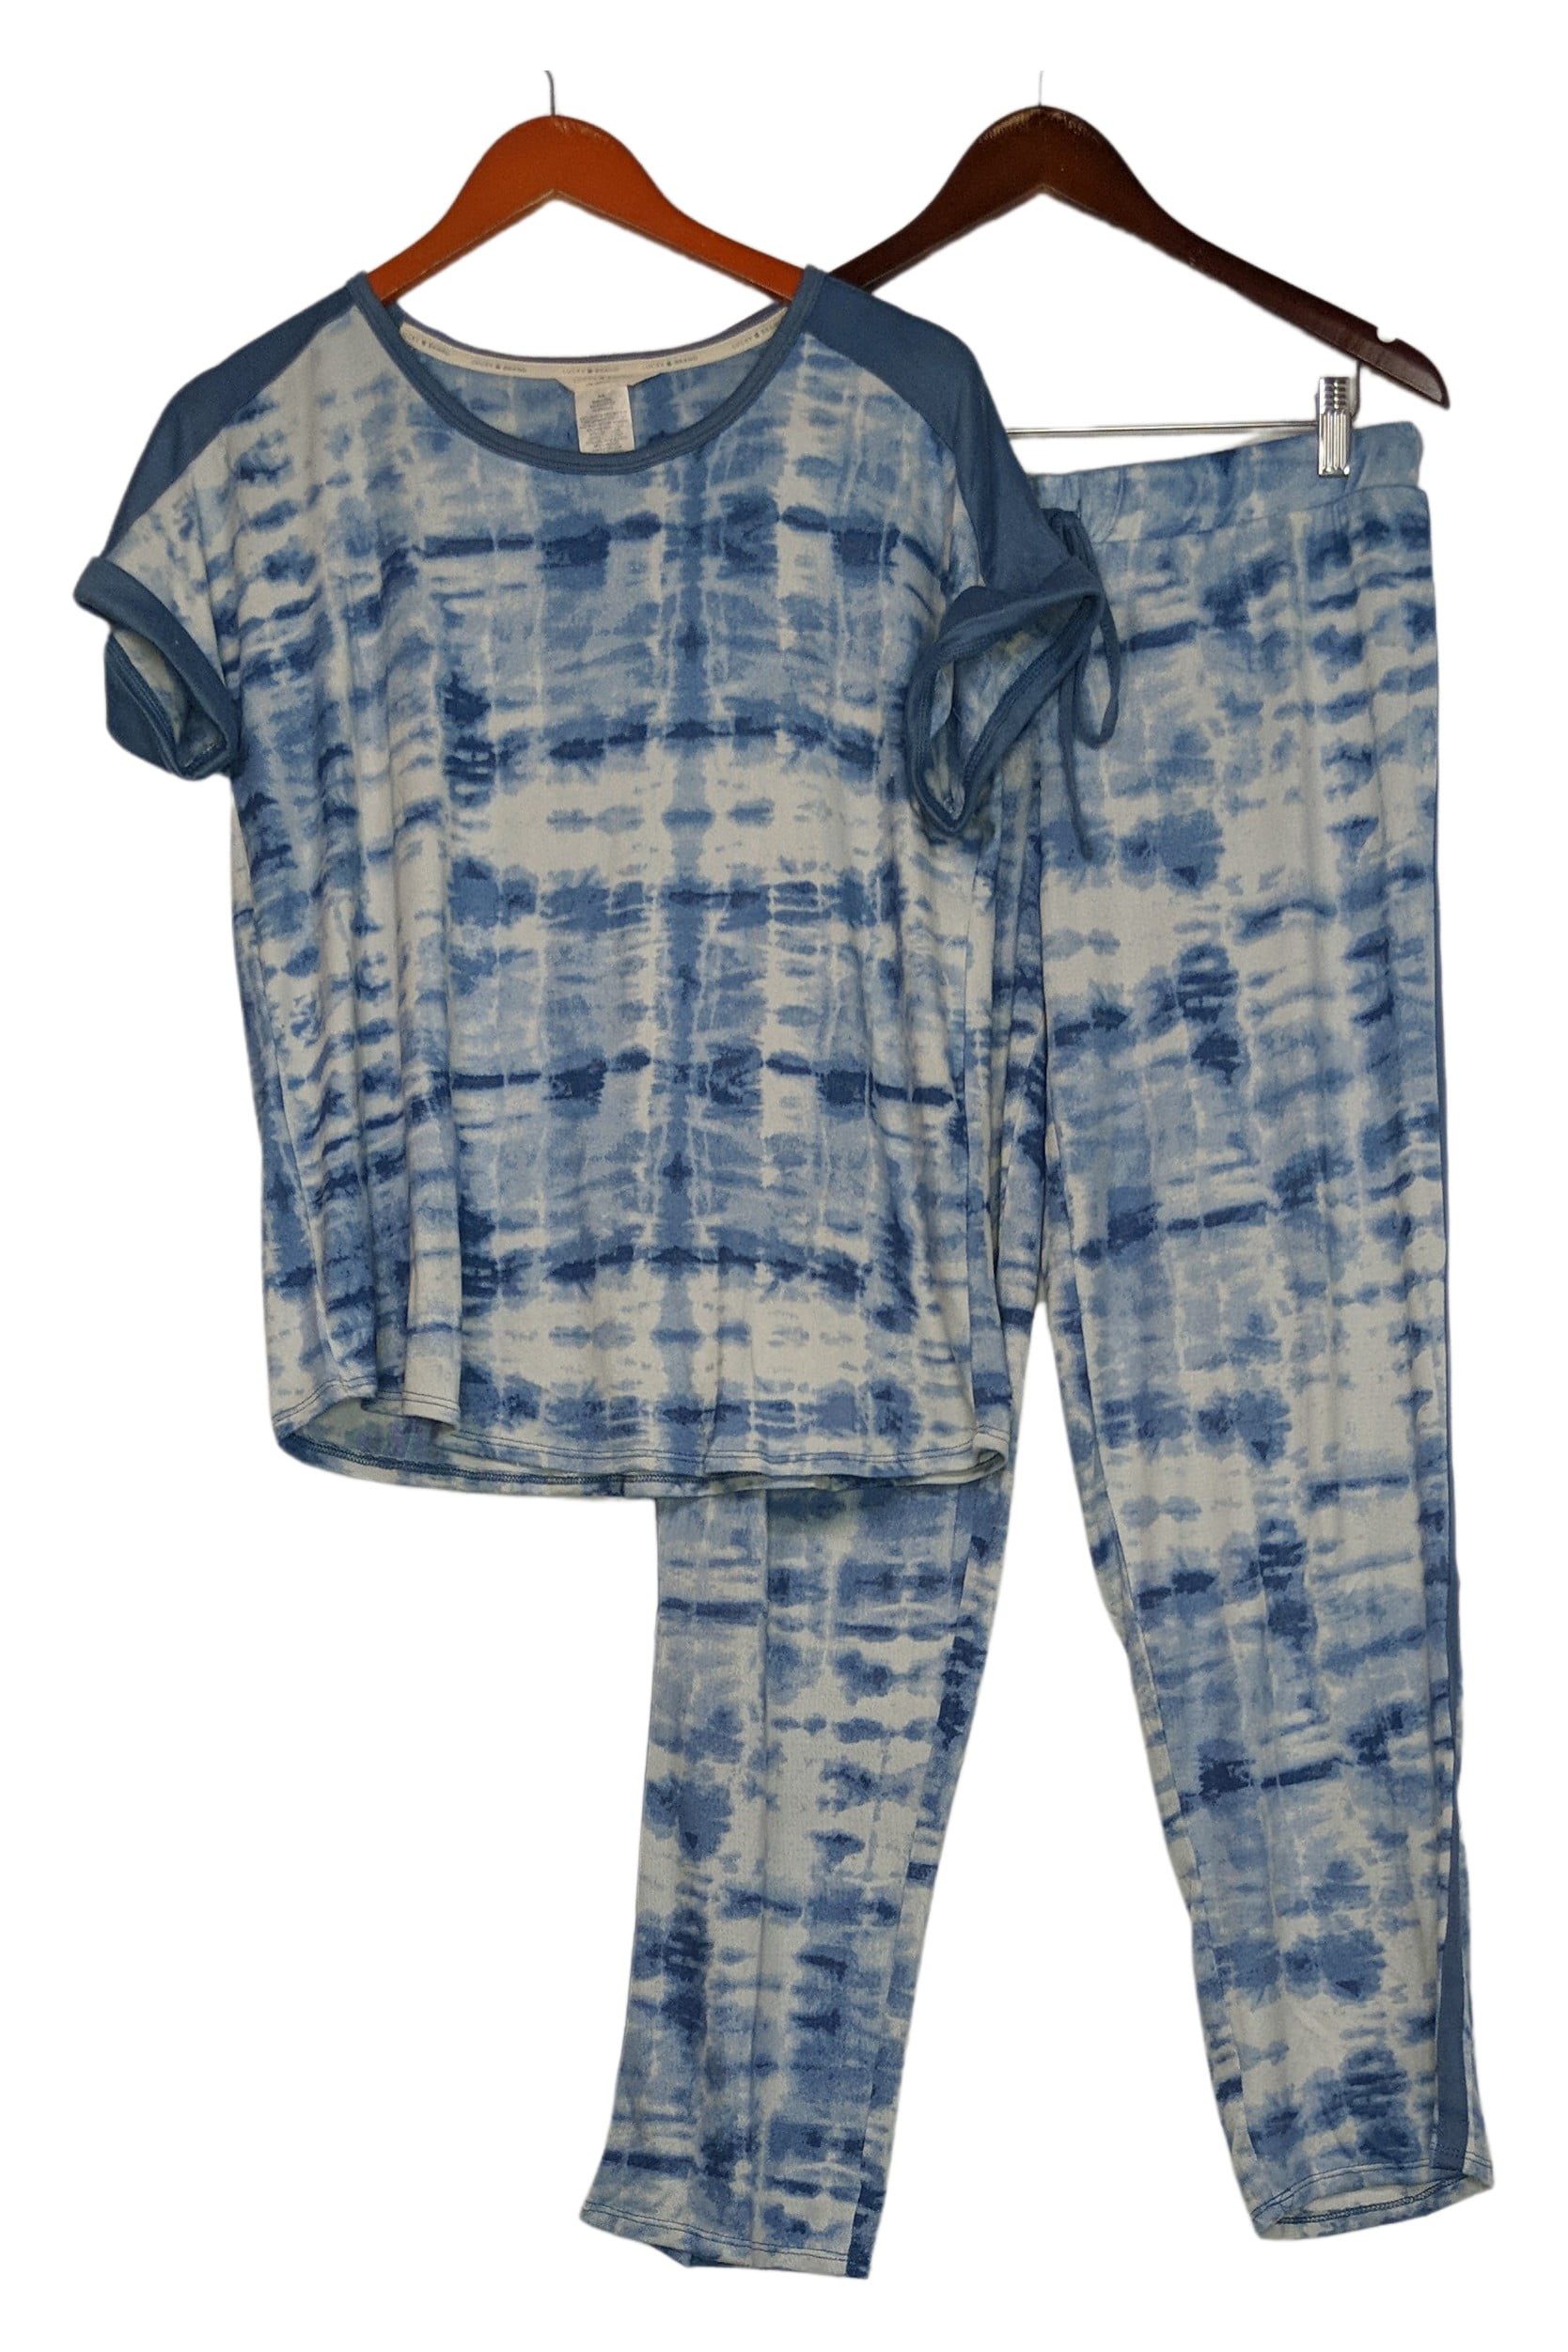 Lucky Brand Pajama Set Women's Size M 4 Piece Set T Tank Short Pant Blue  1457525